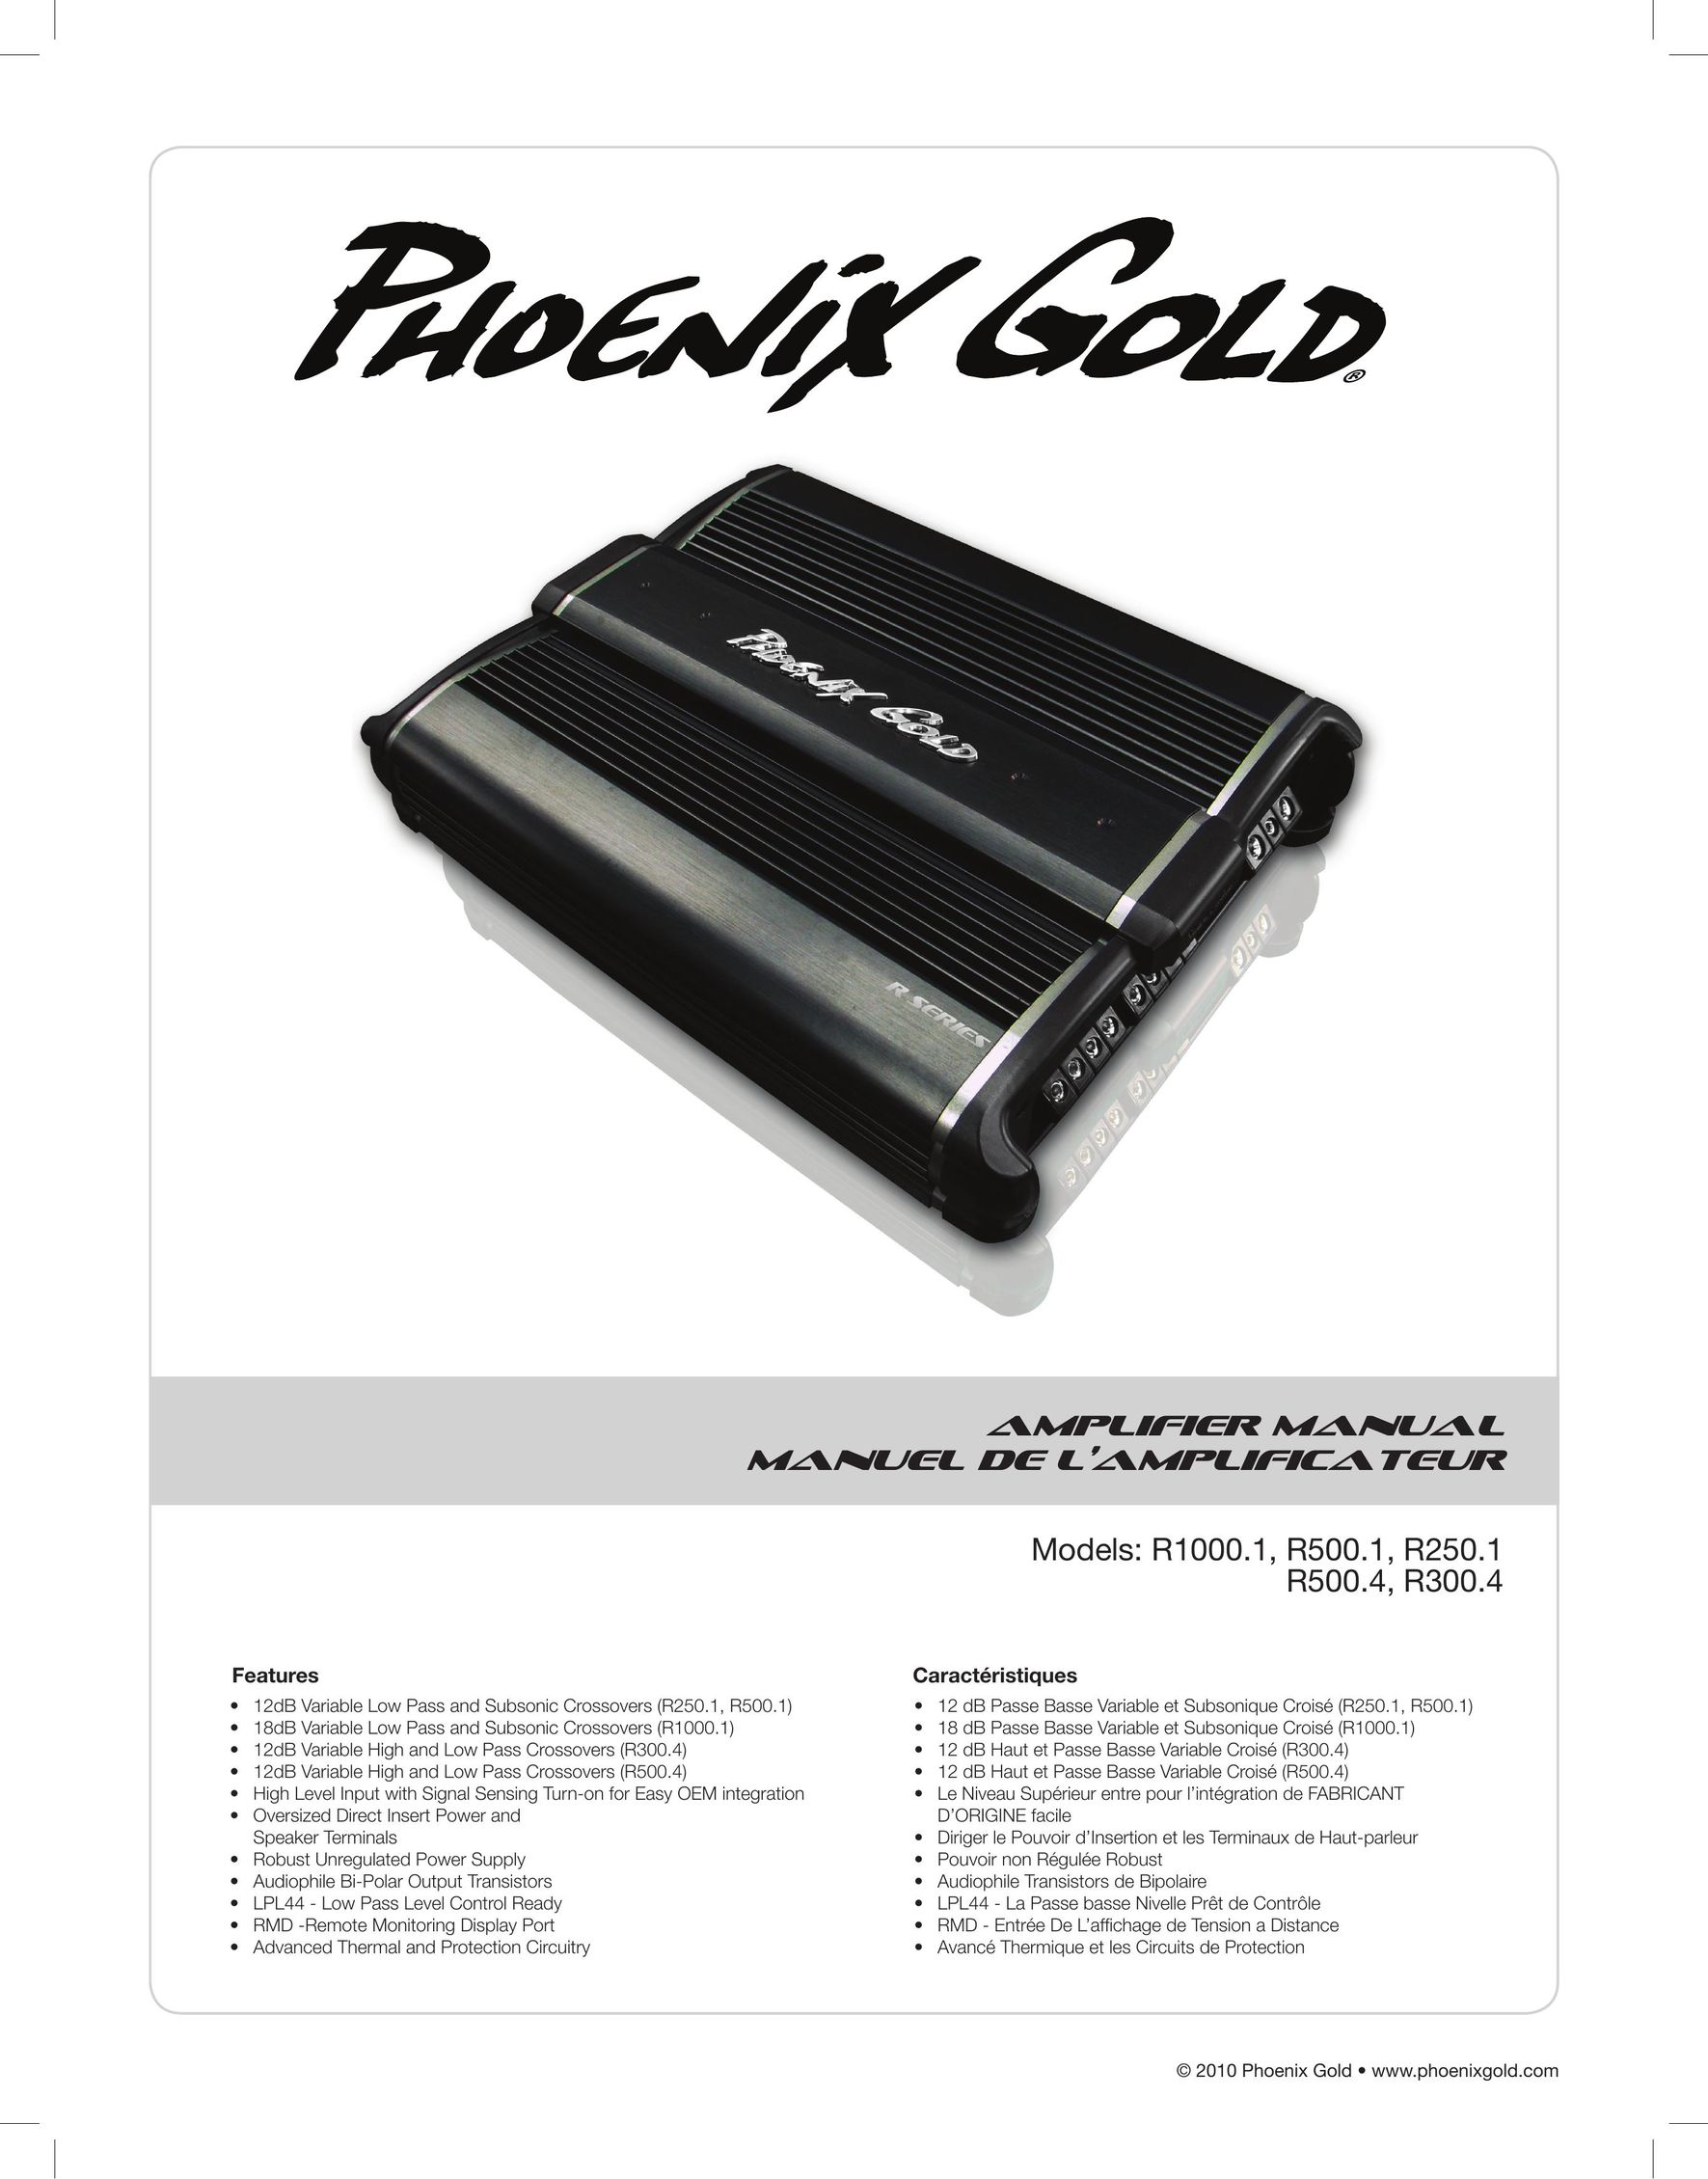 Phoenix Gold R500.4 Car Amplifier User Manual